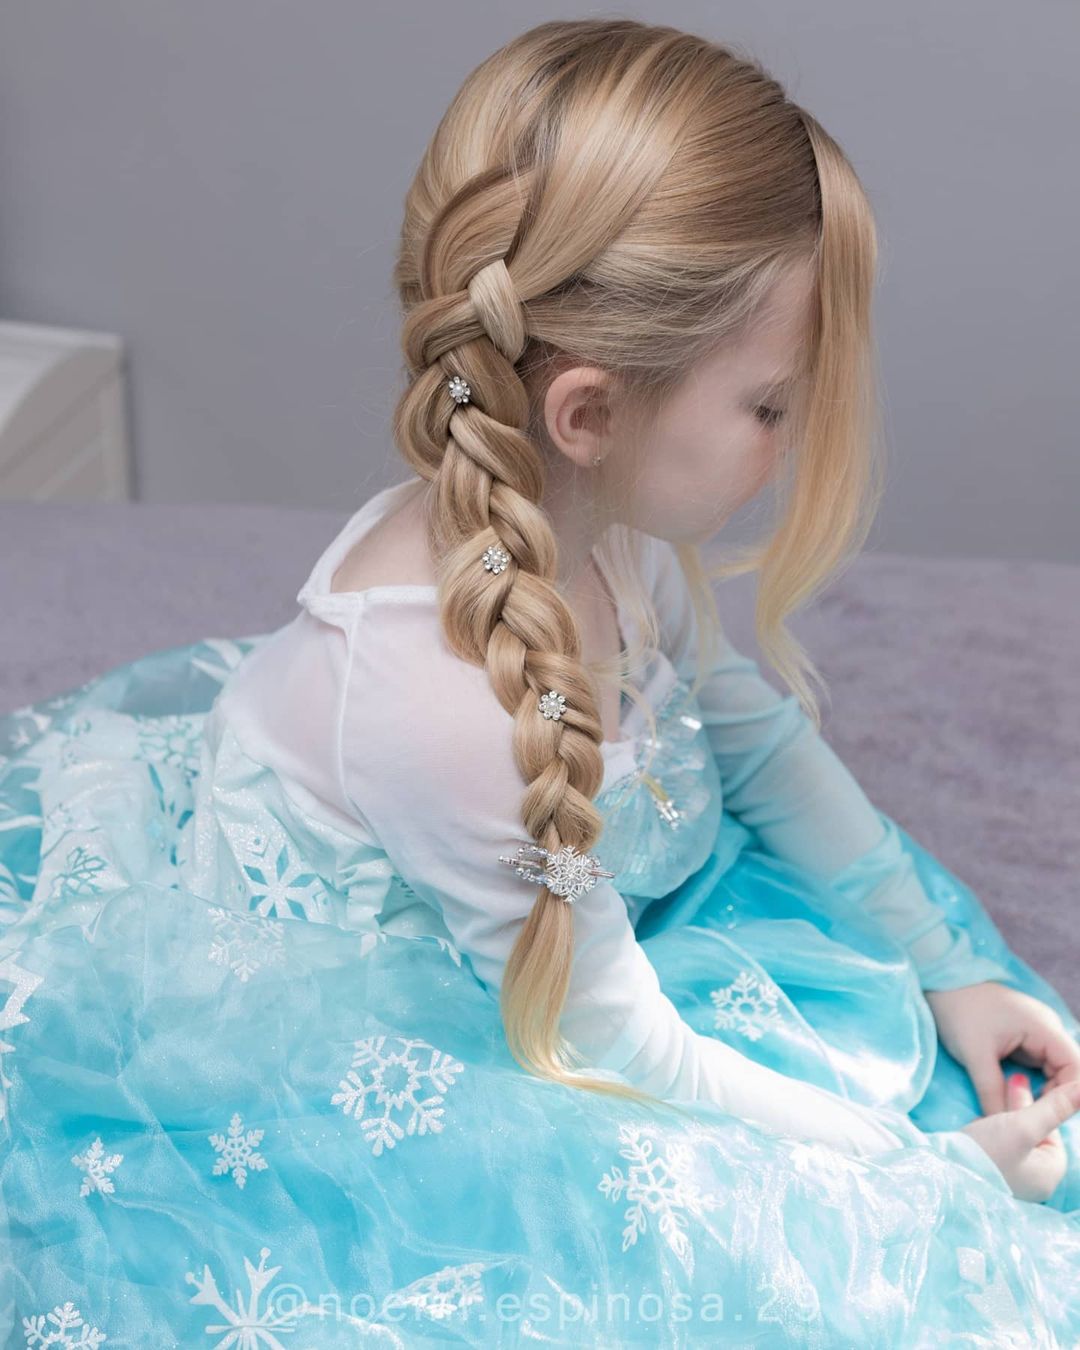 Elsa hairstyle by noemi espinosa.29